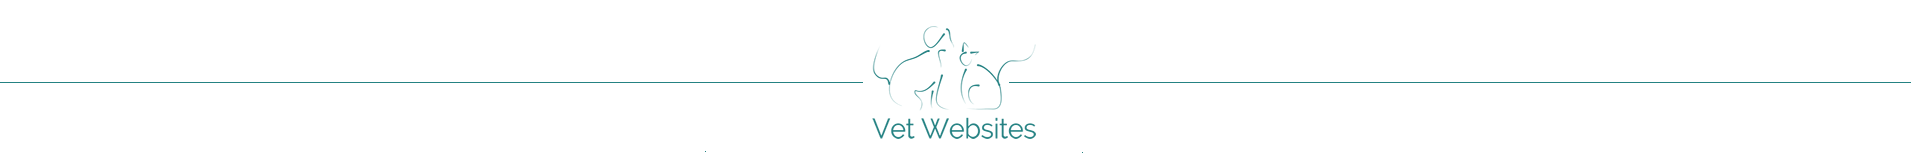 vetwebsites logo